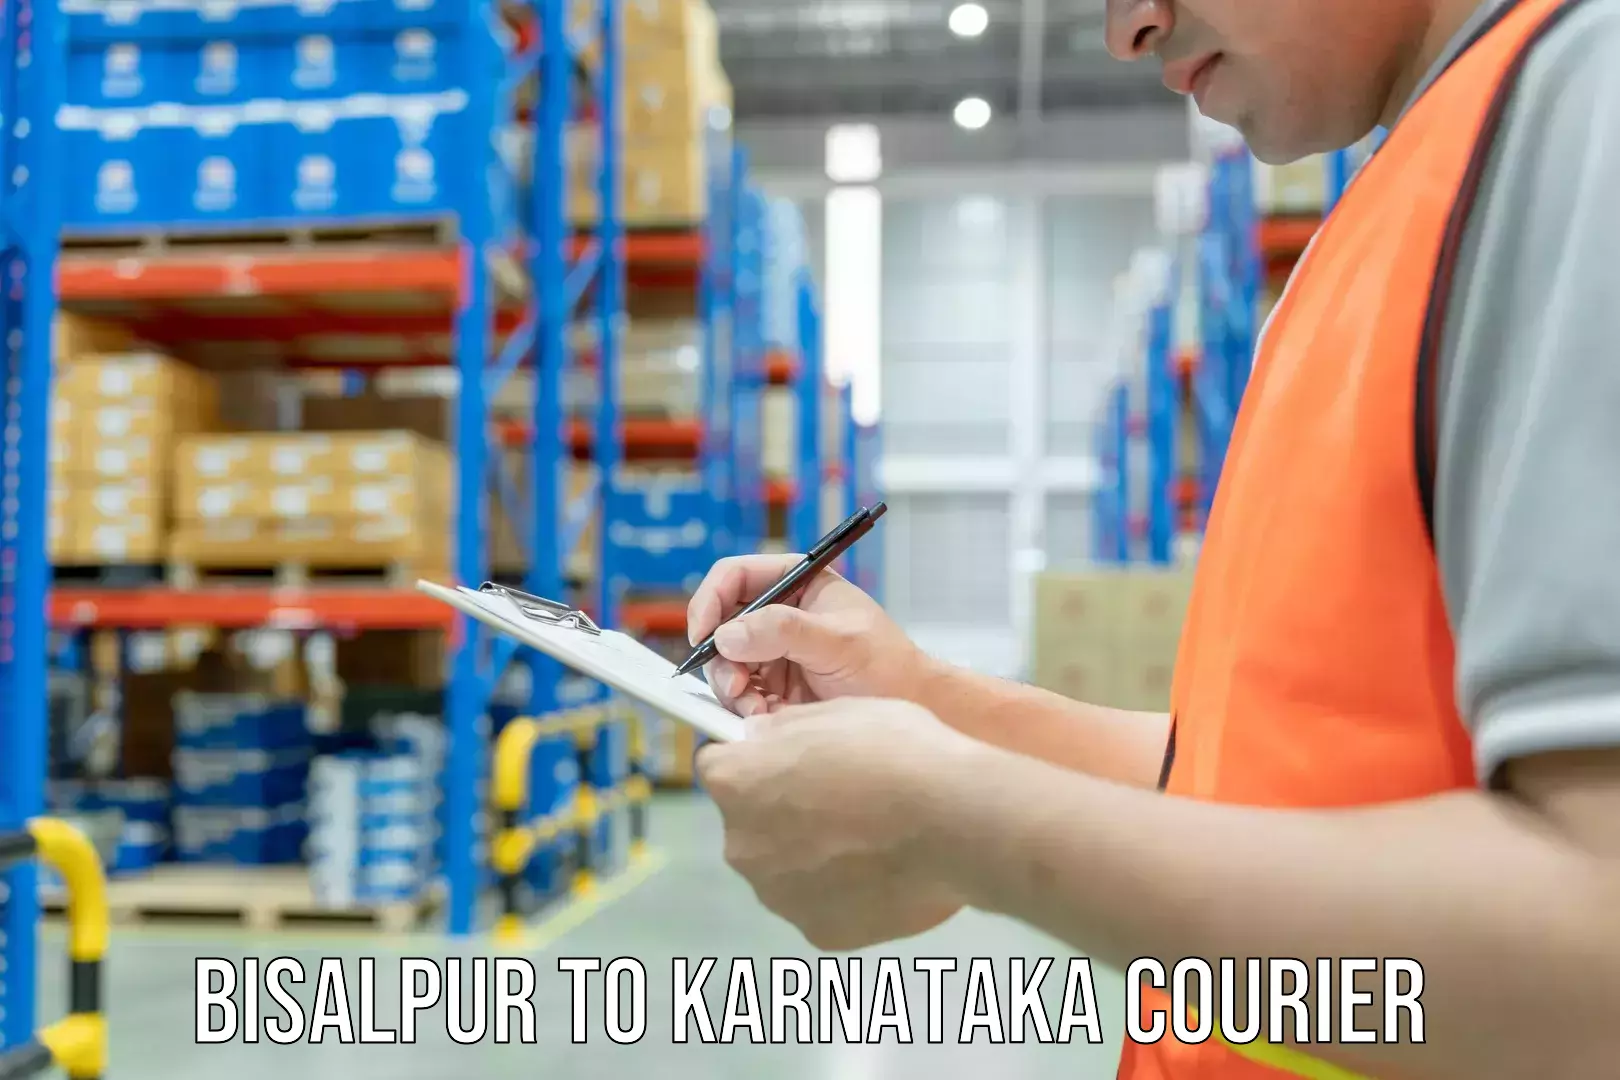 Reliable delivery network Bisalpur to Karnataka